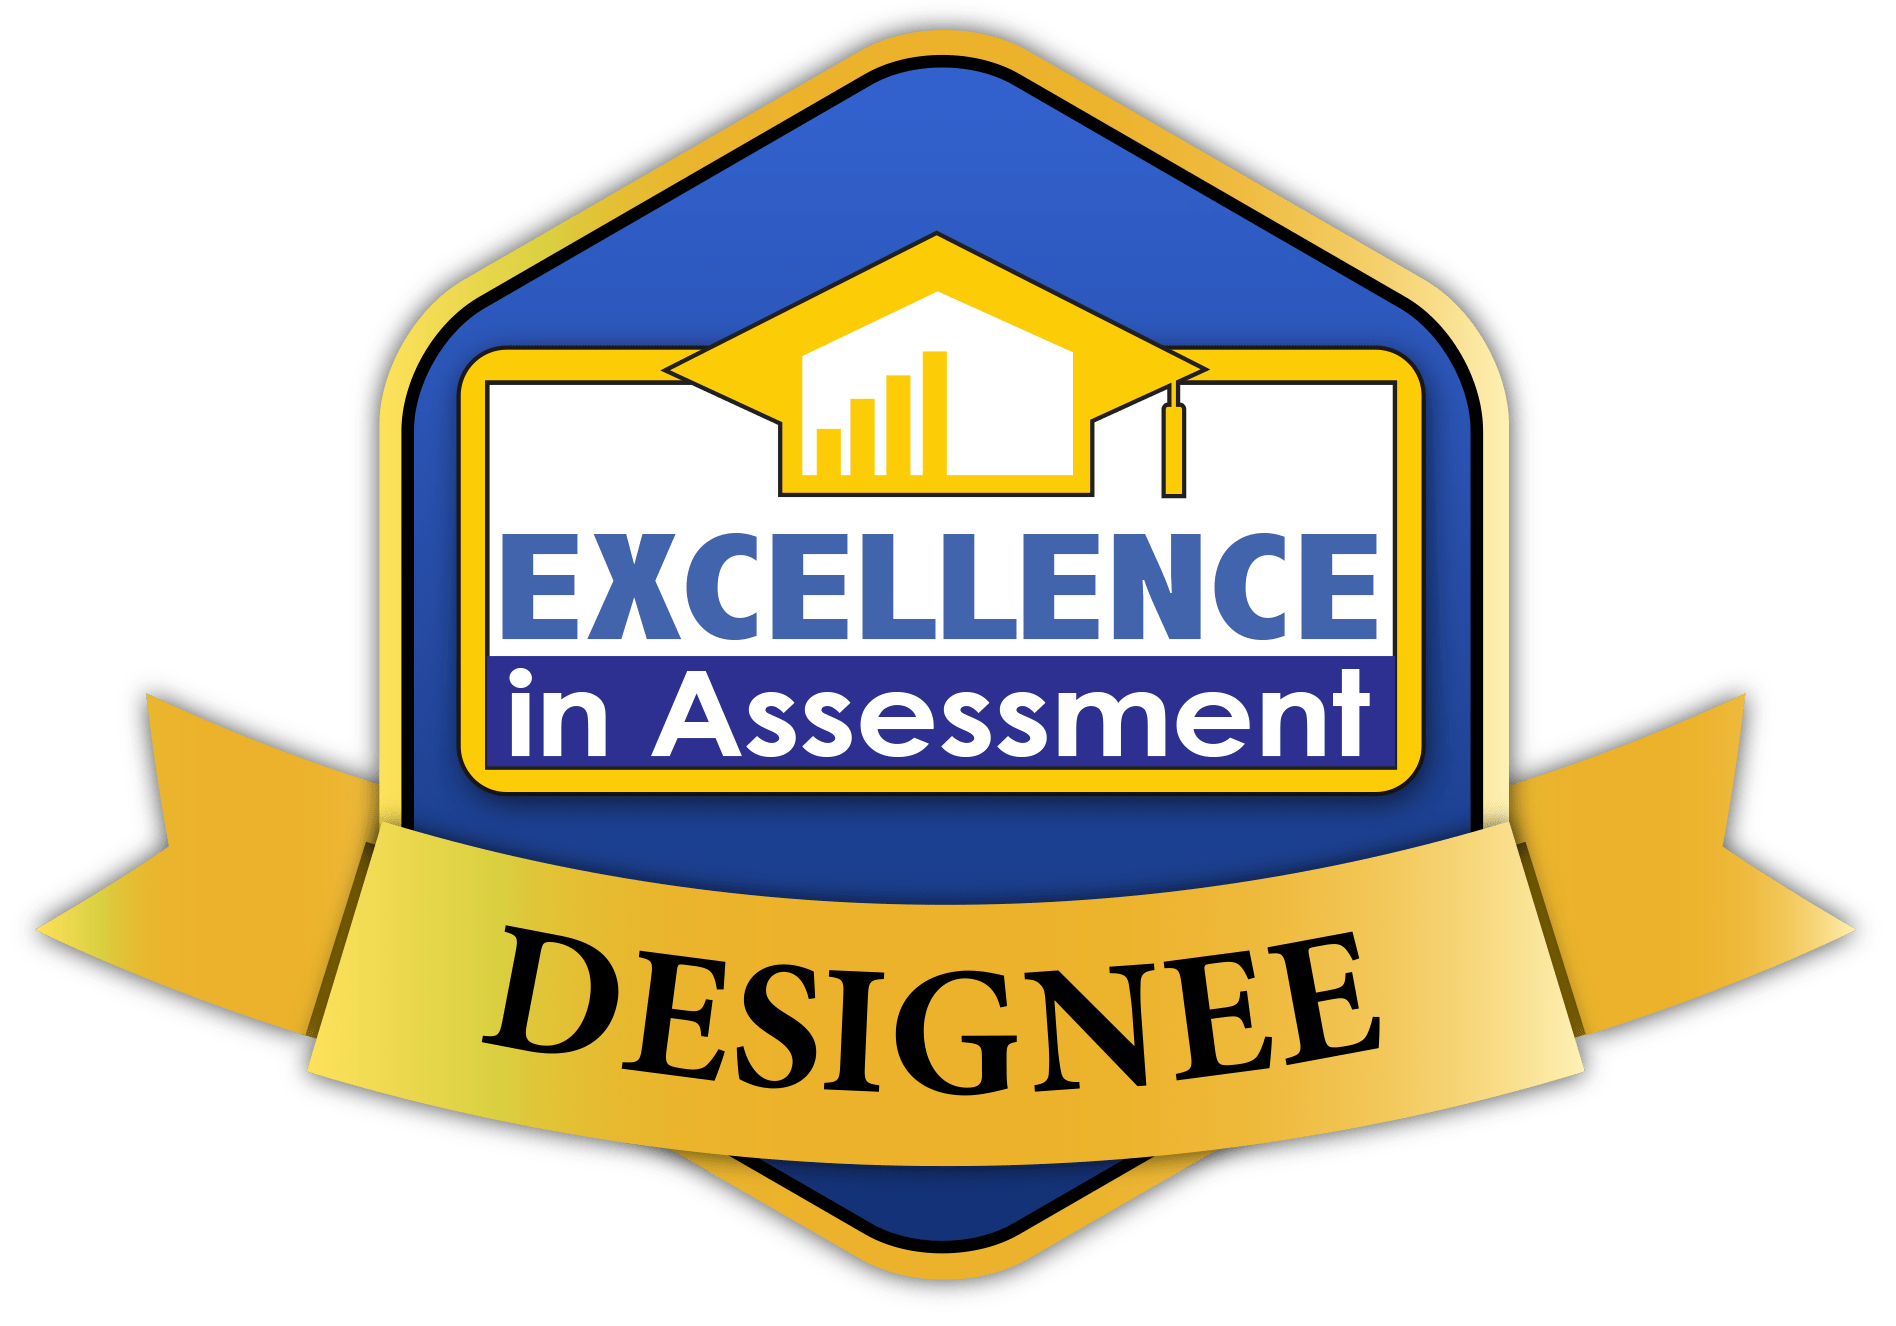 Excellent in Assessment Designee Logo